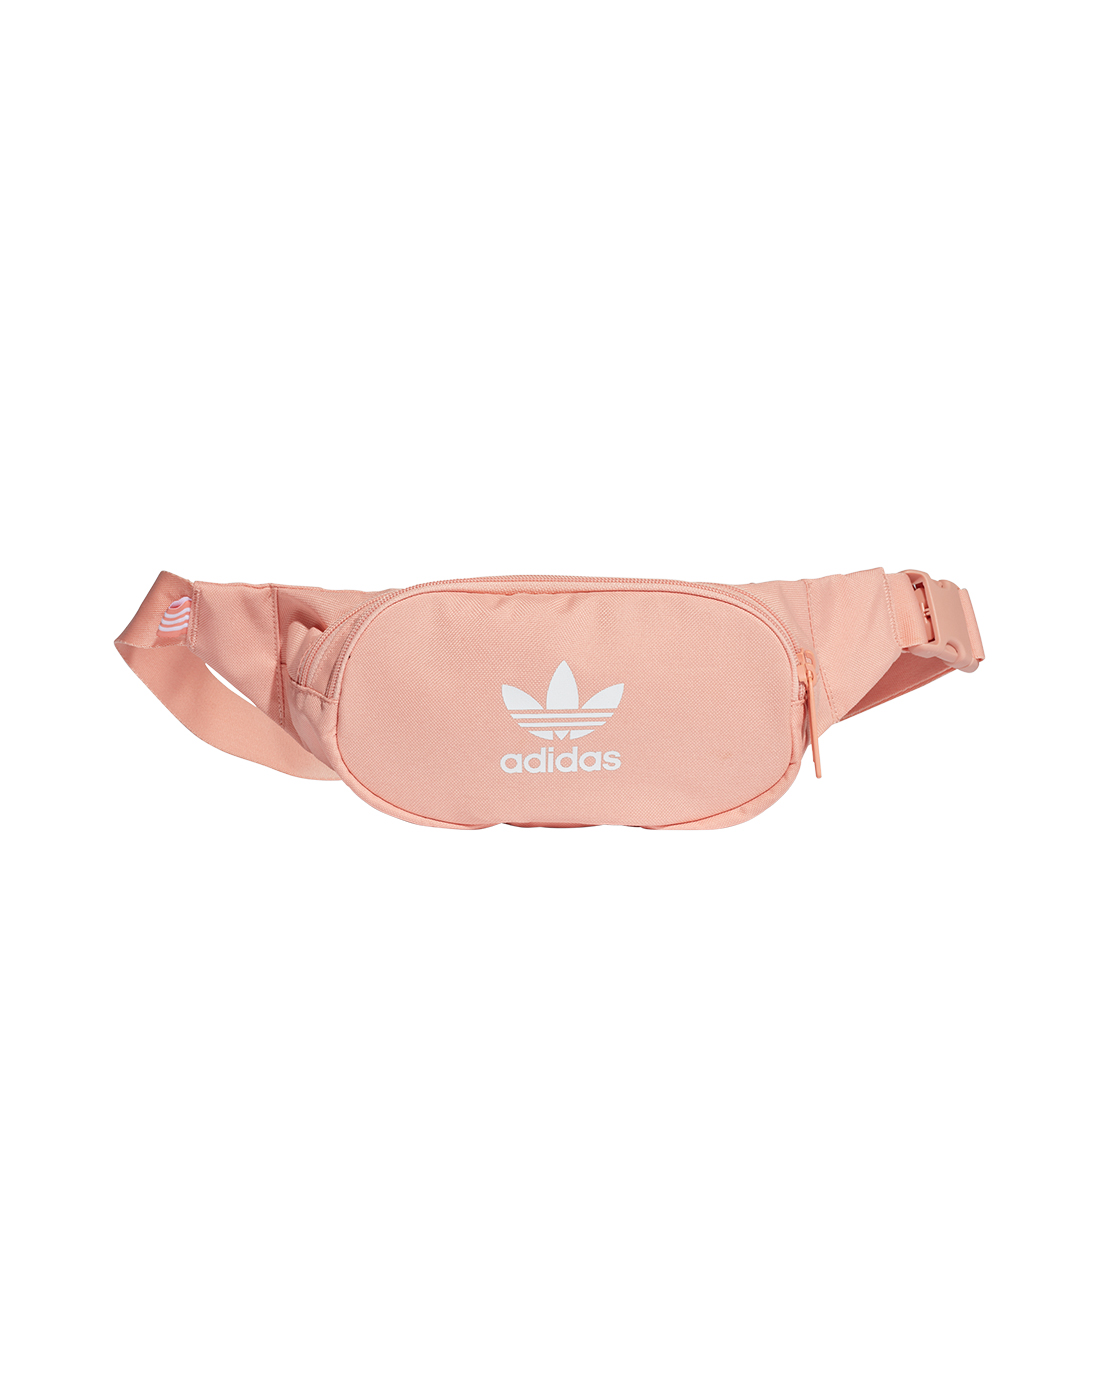 waist bag adidas pink